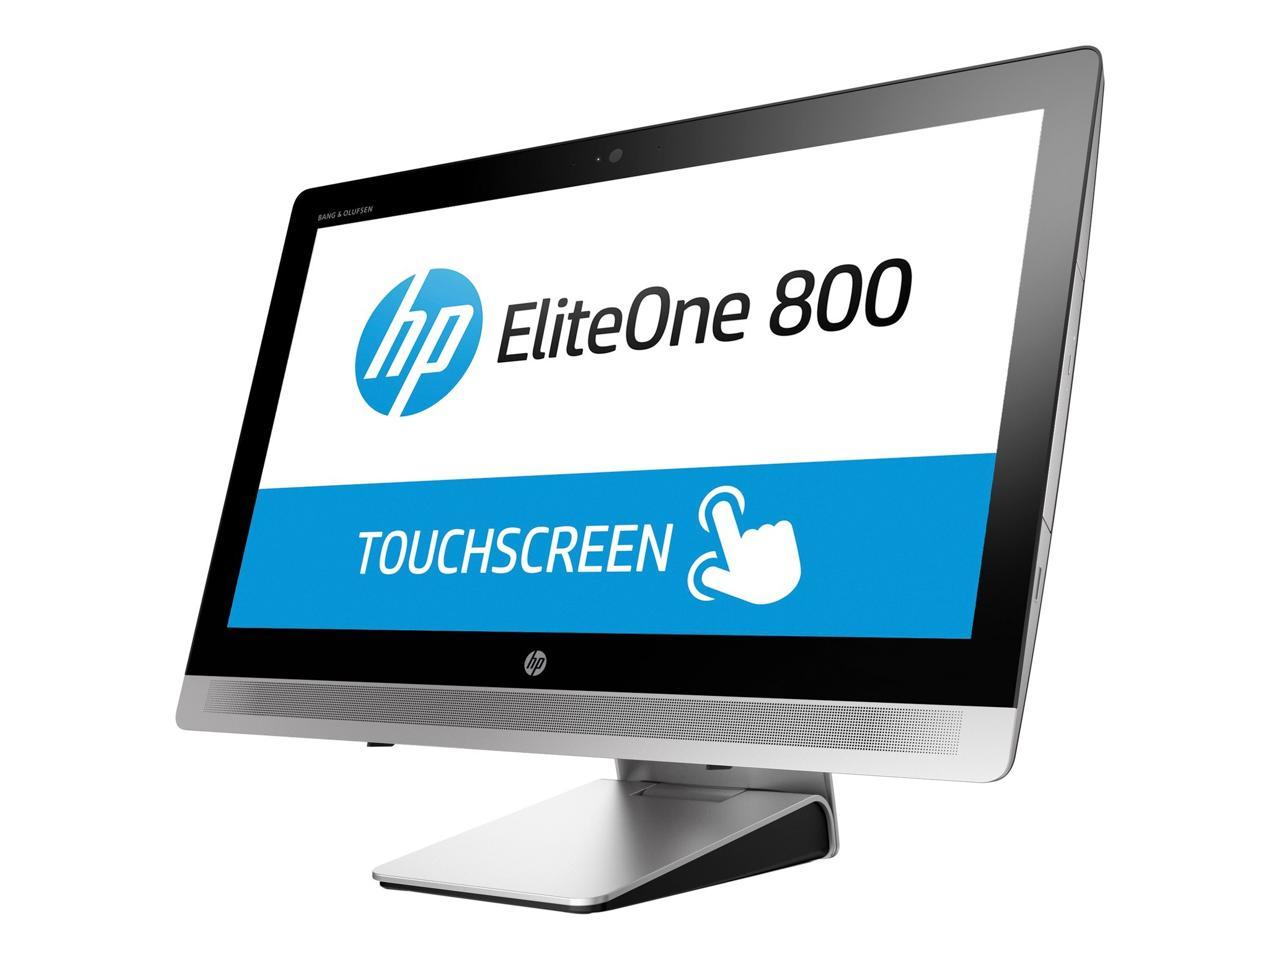 HP EliteOne 800 G2 A1 PC - Intel Core i5 6500 6th Gen 3.20 GHz 8GB 256GB SSD DVD-RW Windows 10 Pro 64-Bit